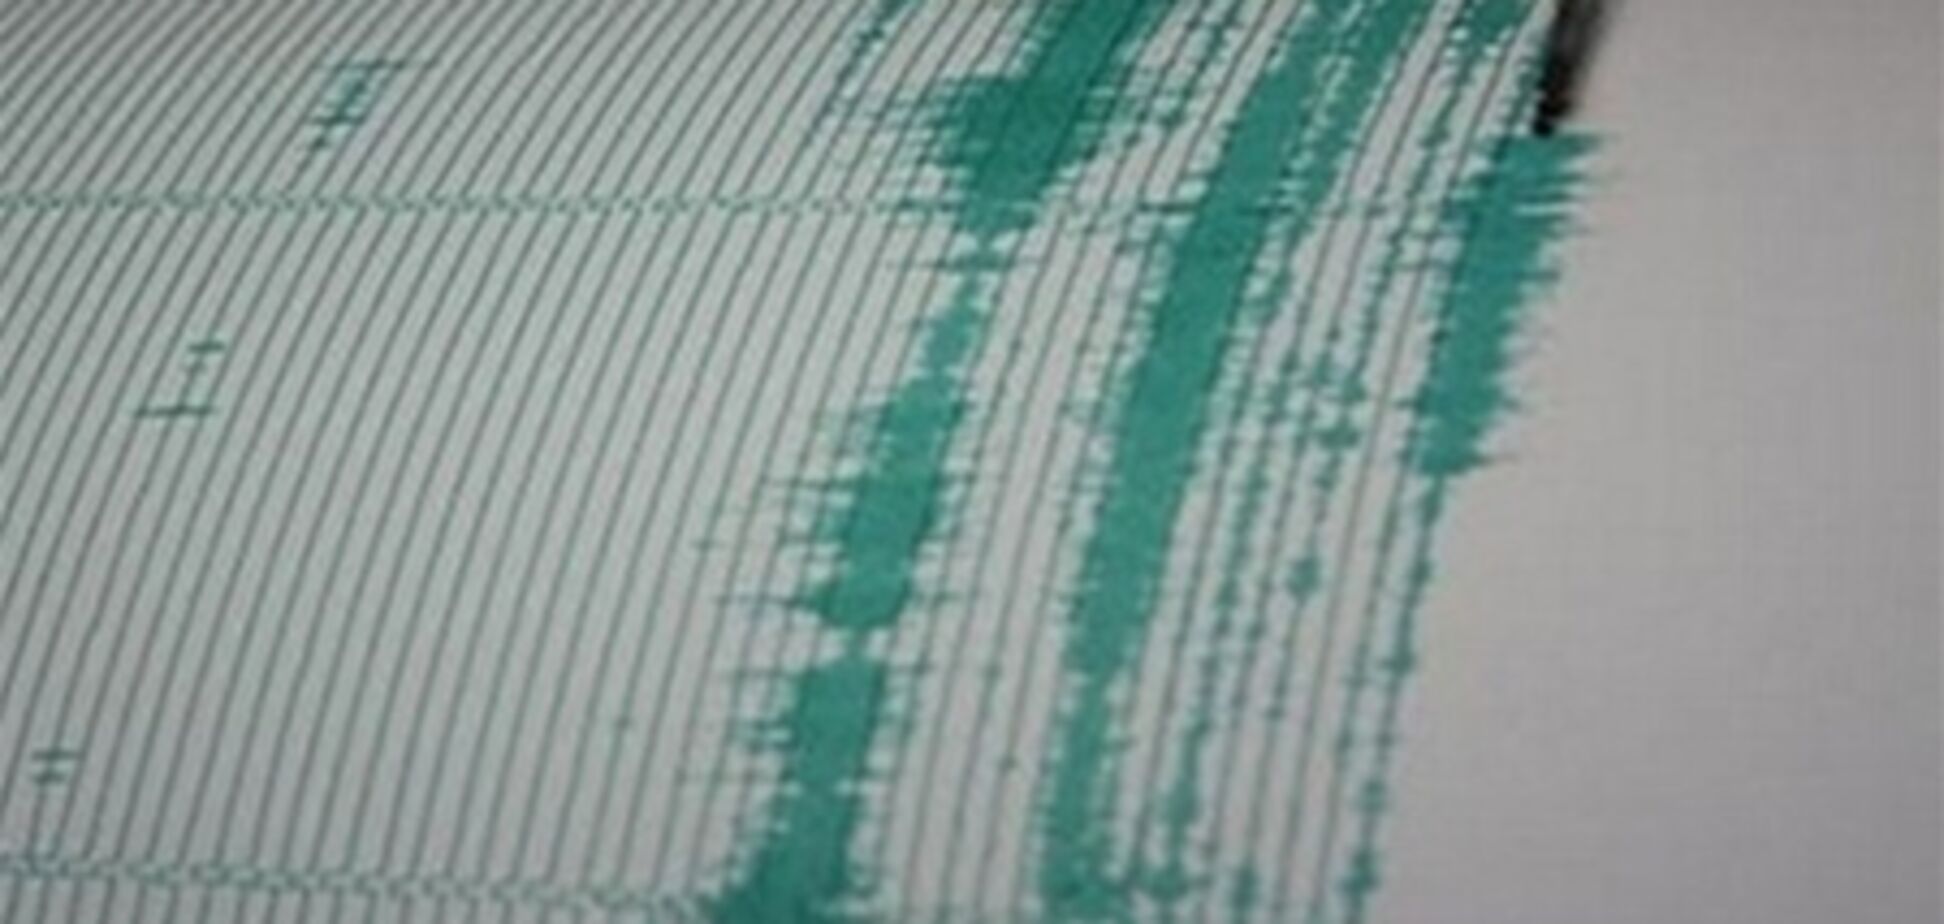 Експерт: землетрус близько Кривого Рогу - тектонічне